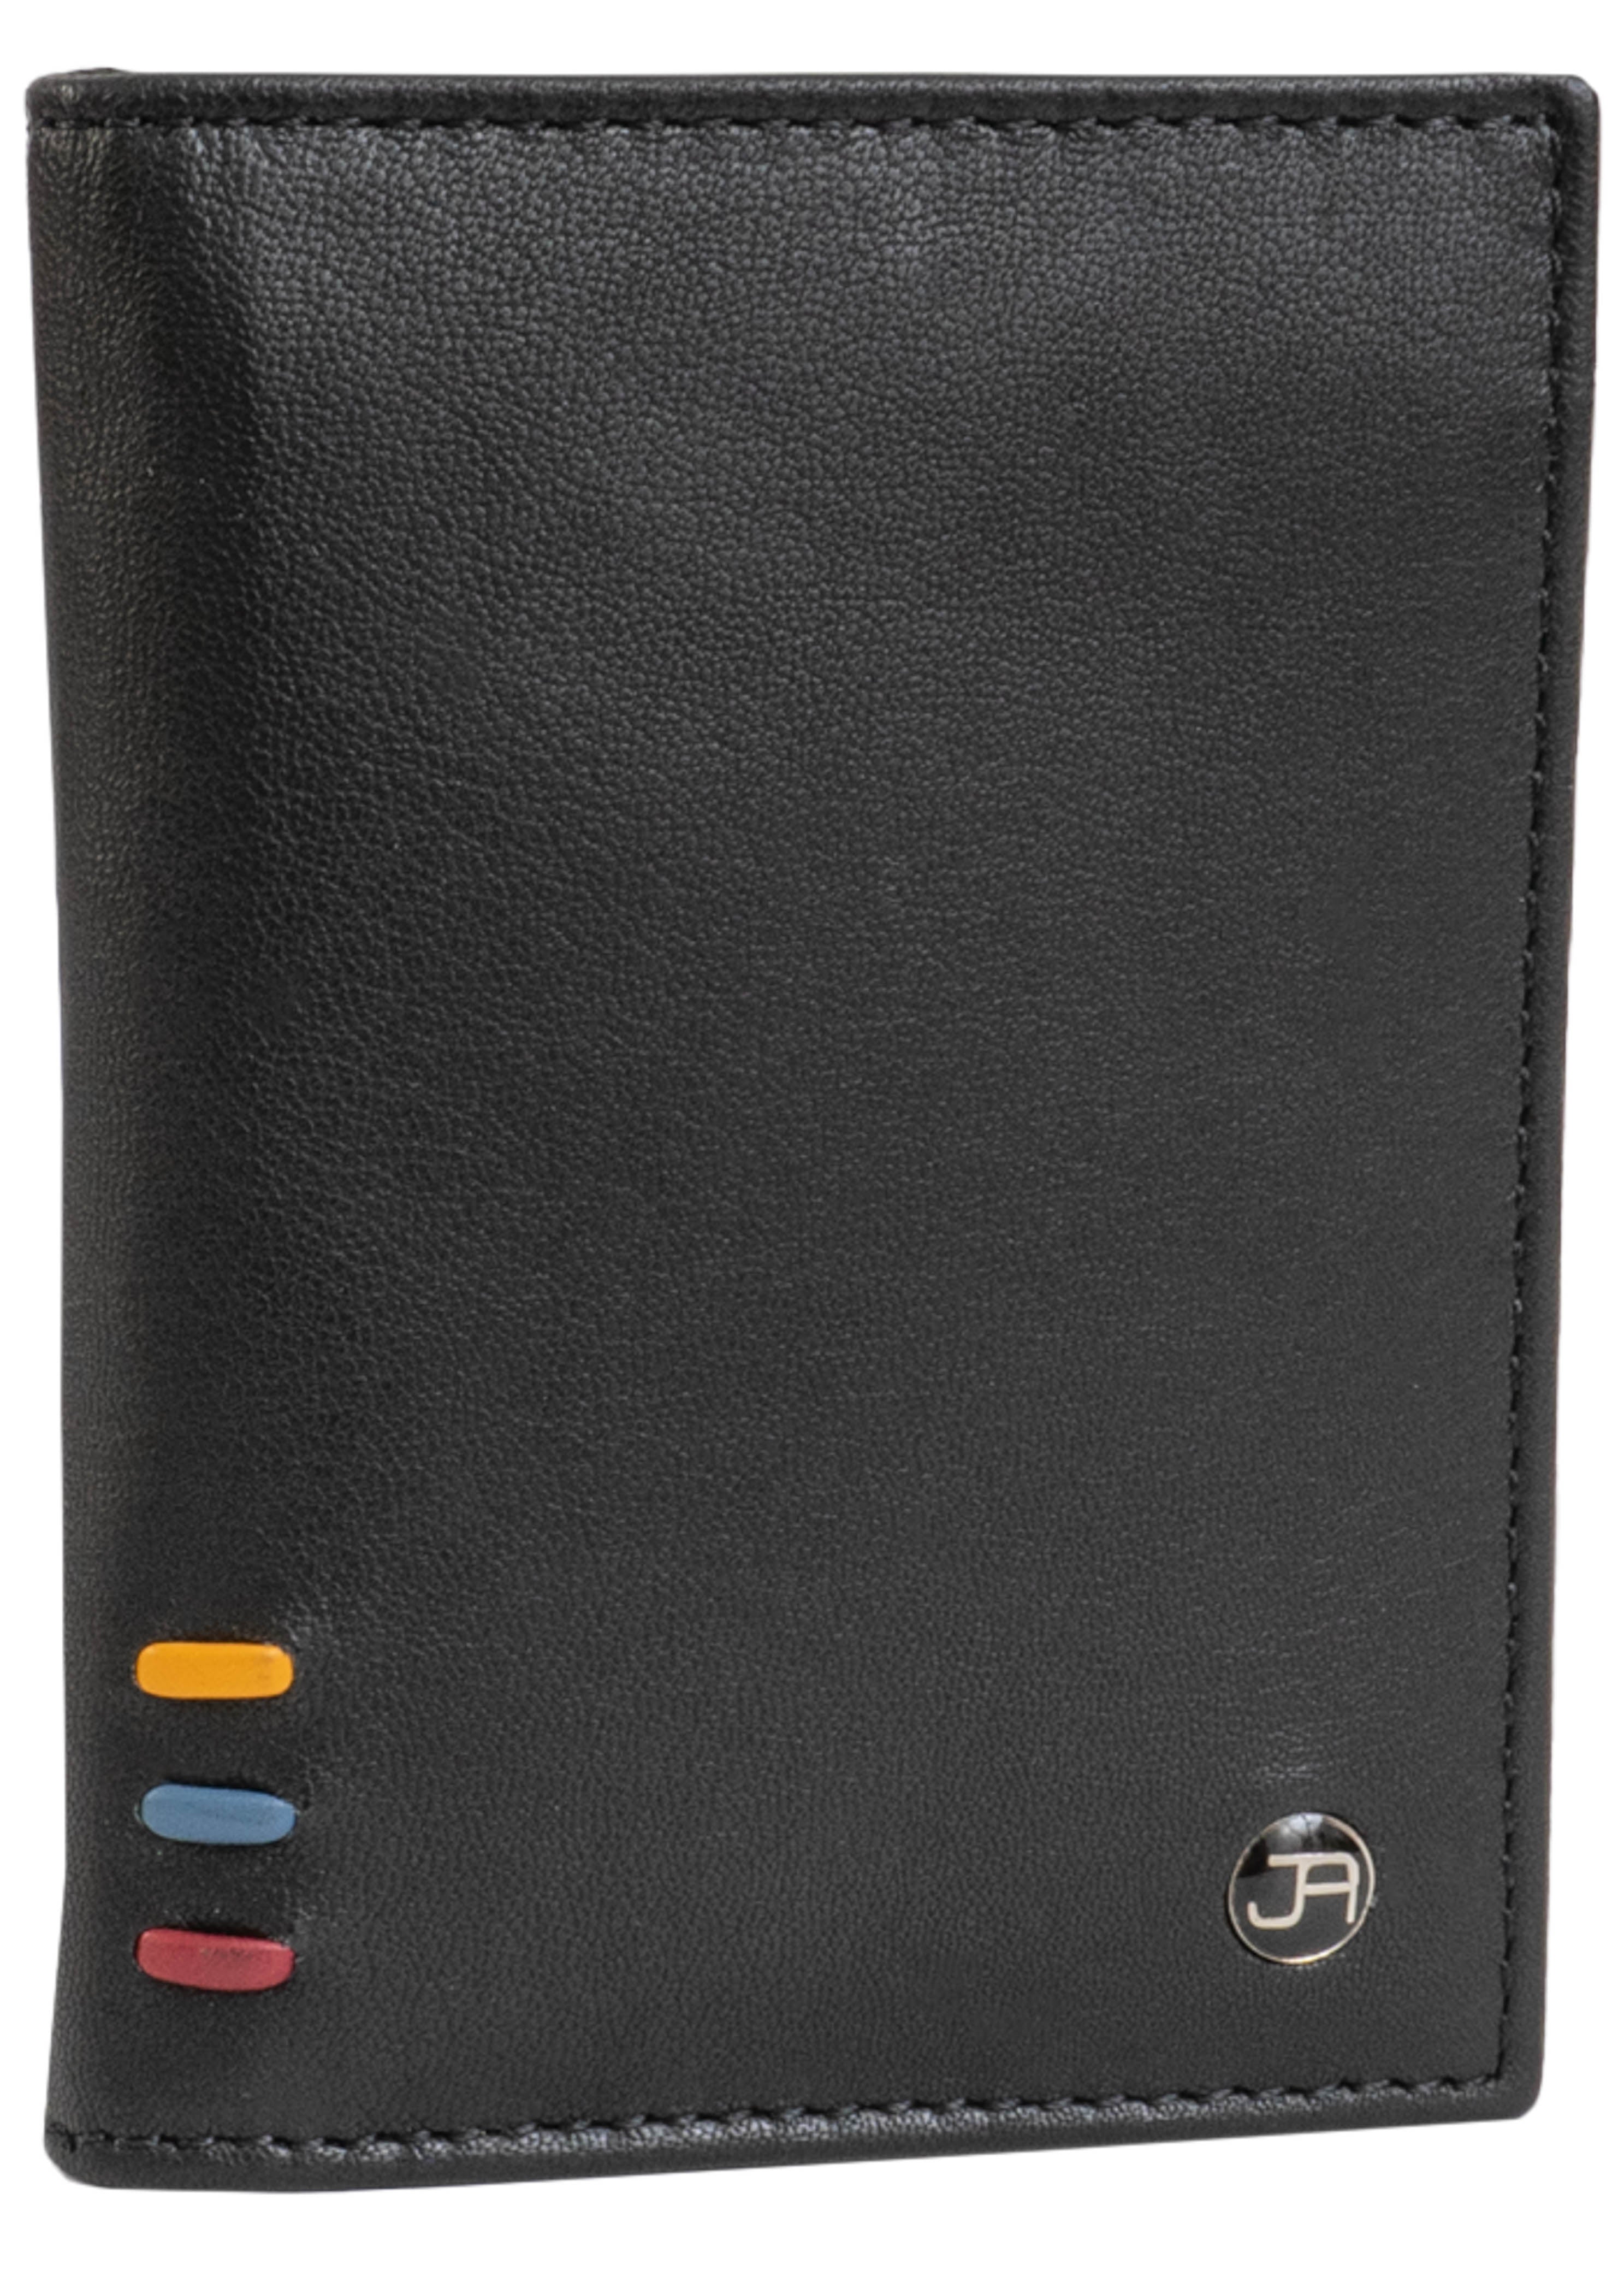 title:Jack Abrahams Bi-Fold RFID Wallet With Flip ID Window Pocket;color:Black Multi